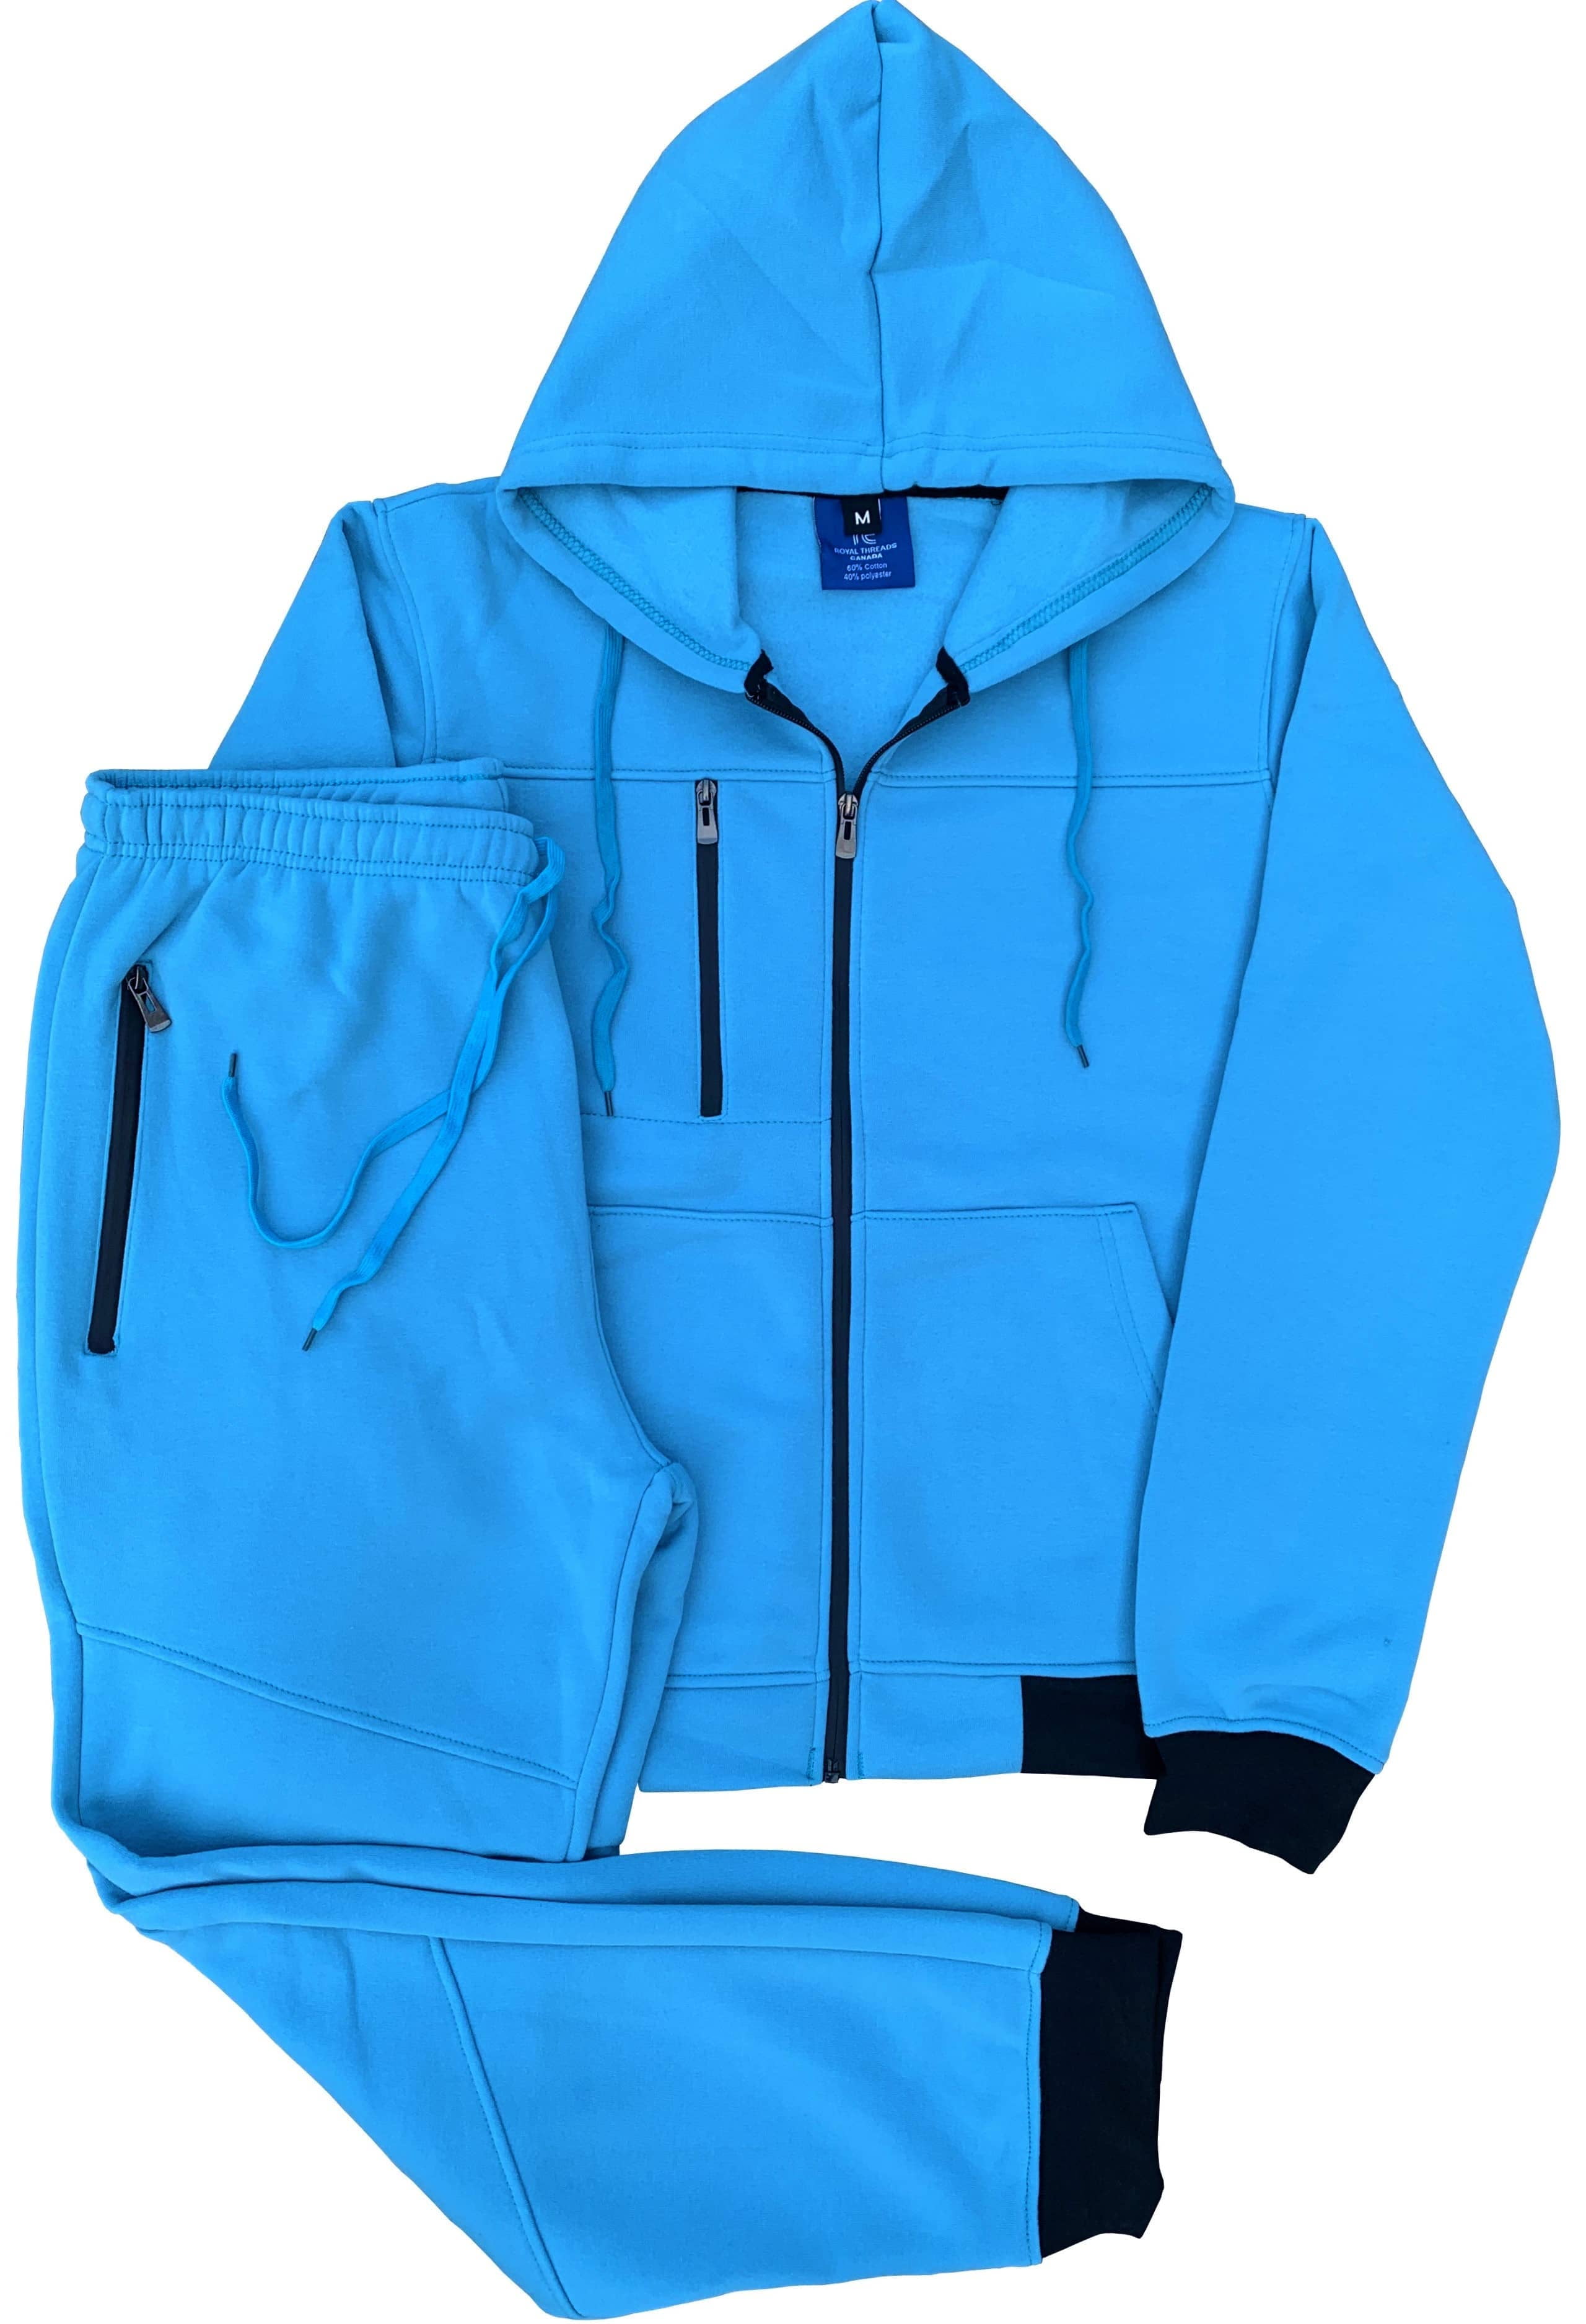 Men Tech Jogger Fleece Suit Top and Bottom Sweatsuit Outfit - Walmart.com